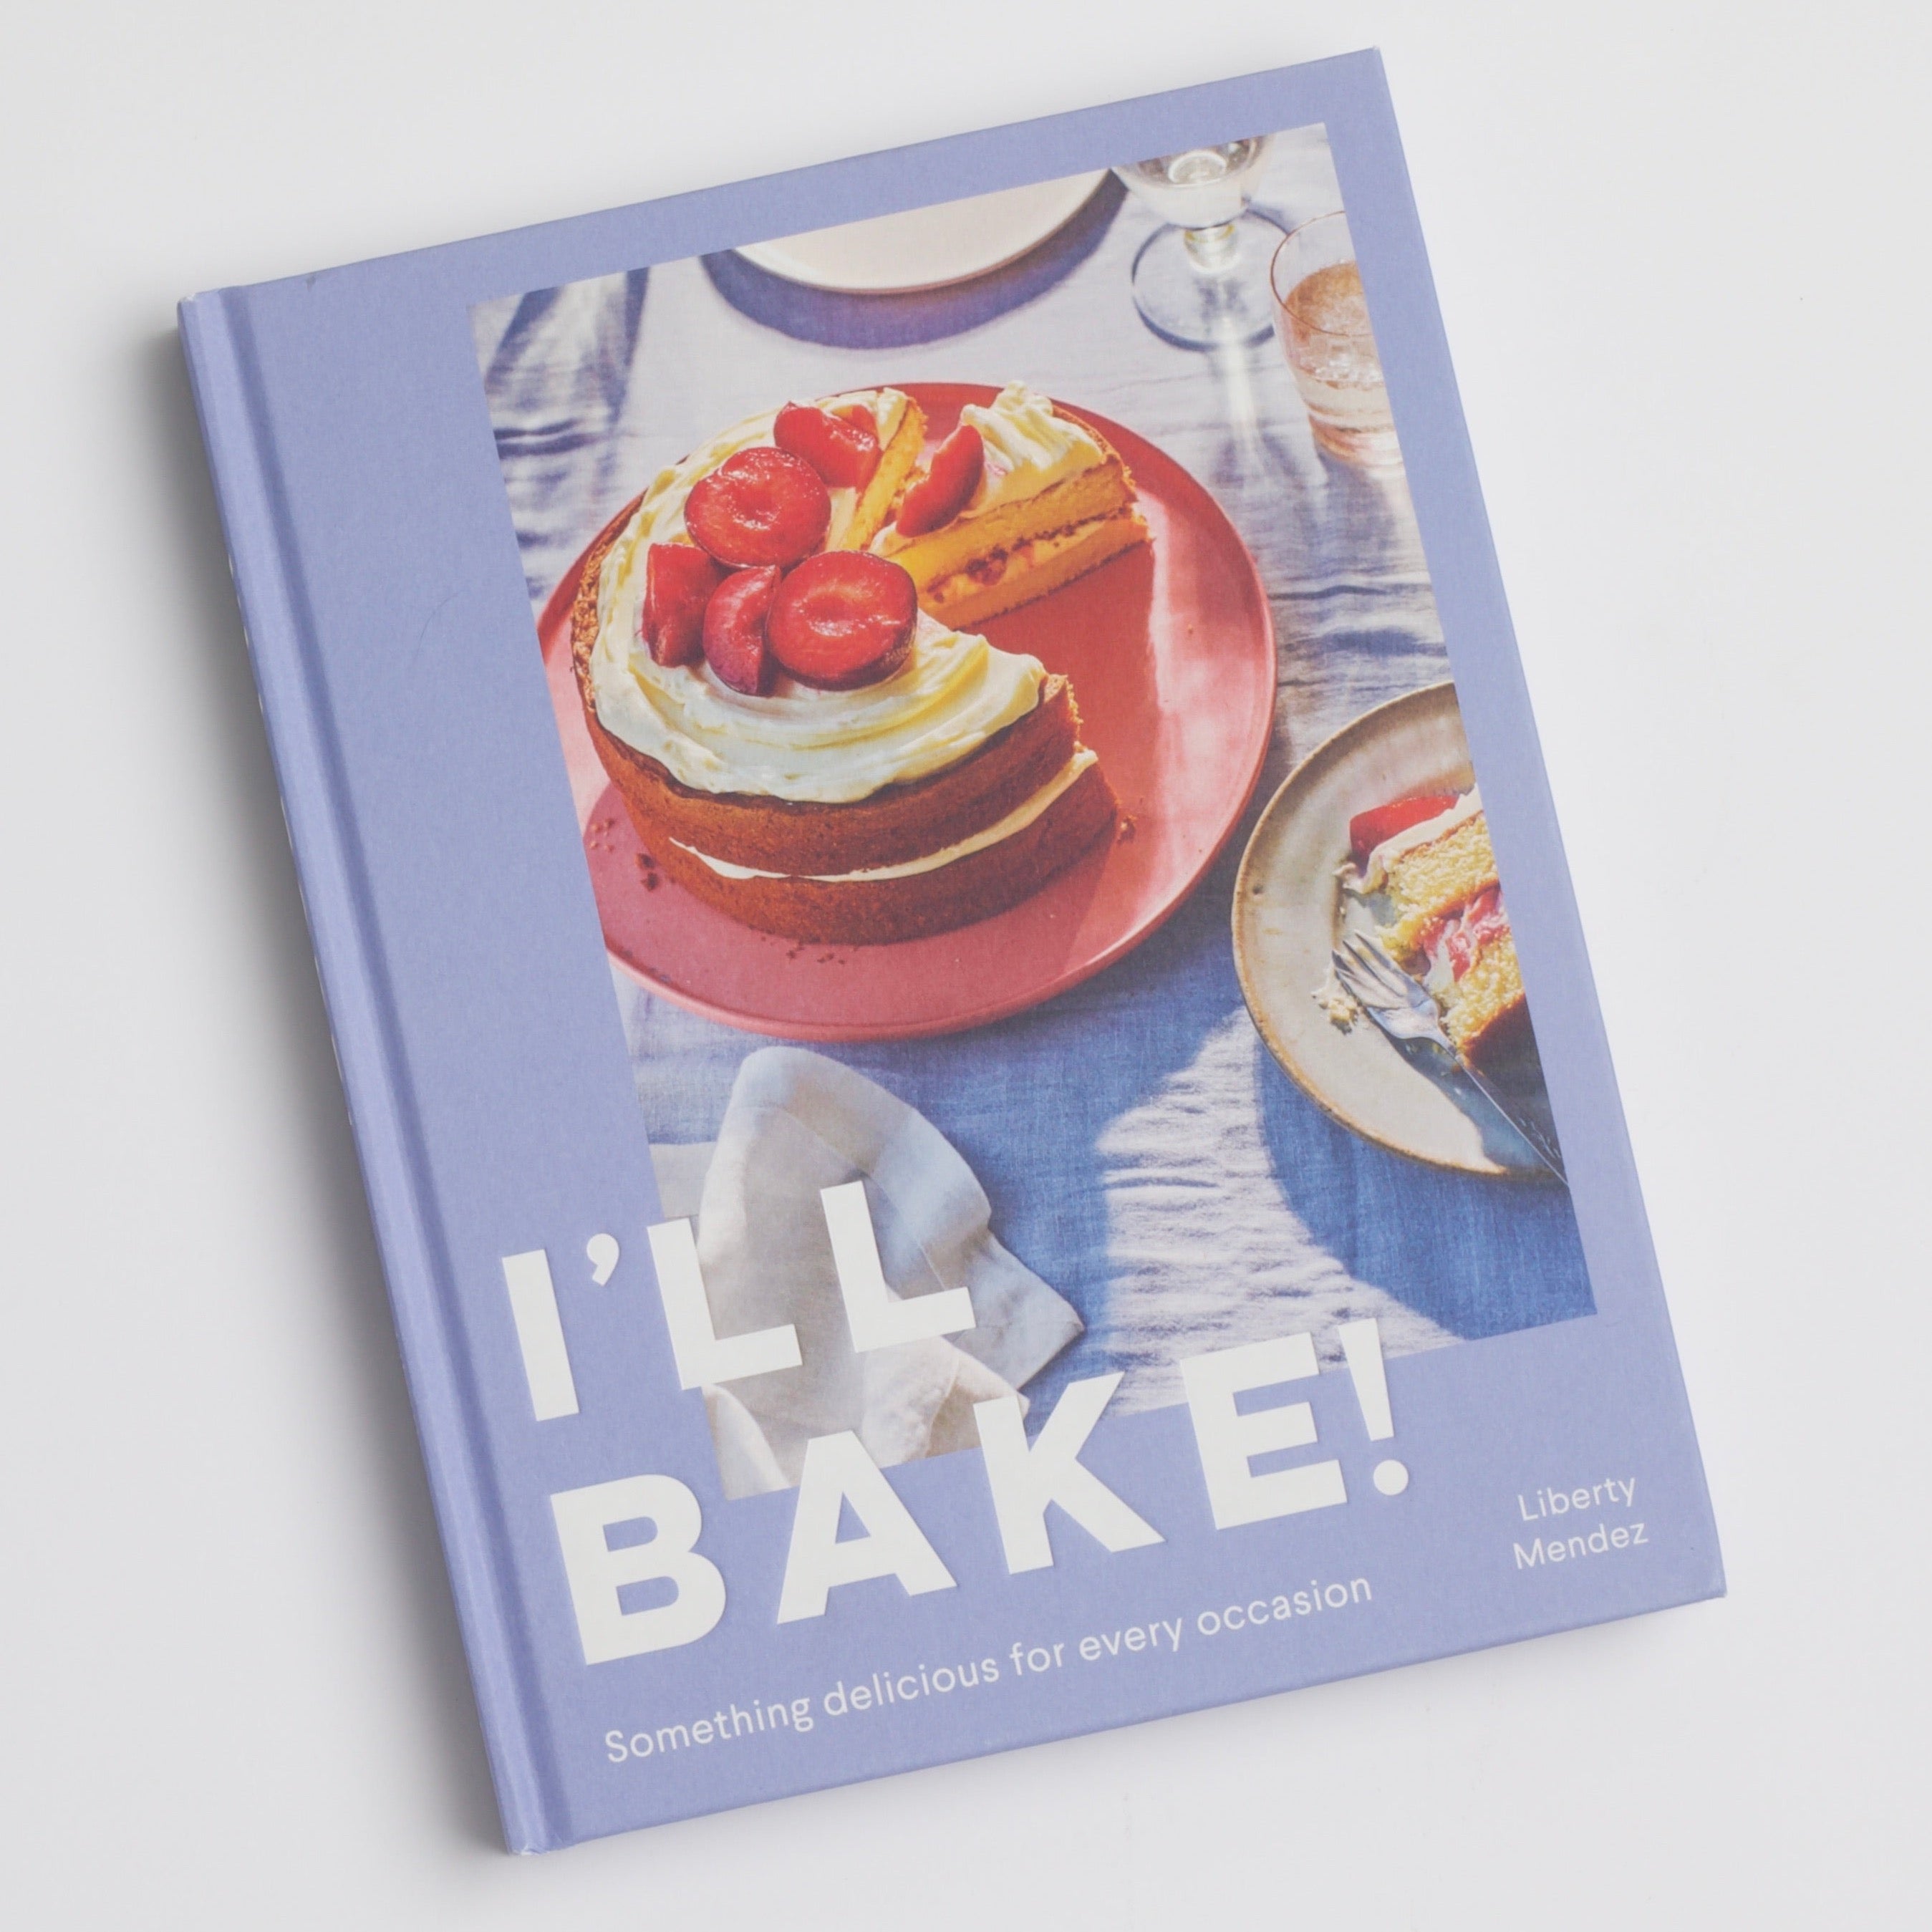 I'll Bake Cookbook cover